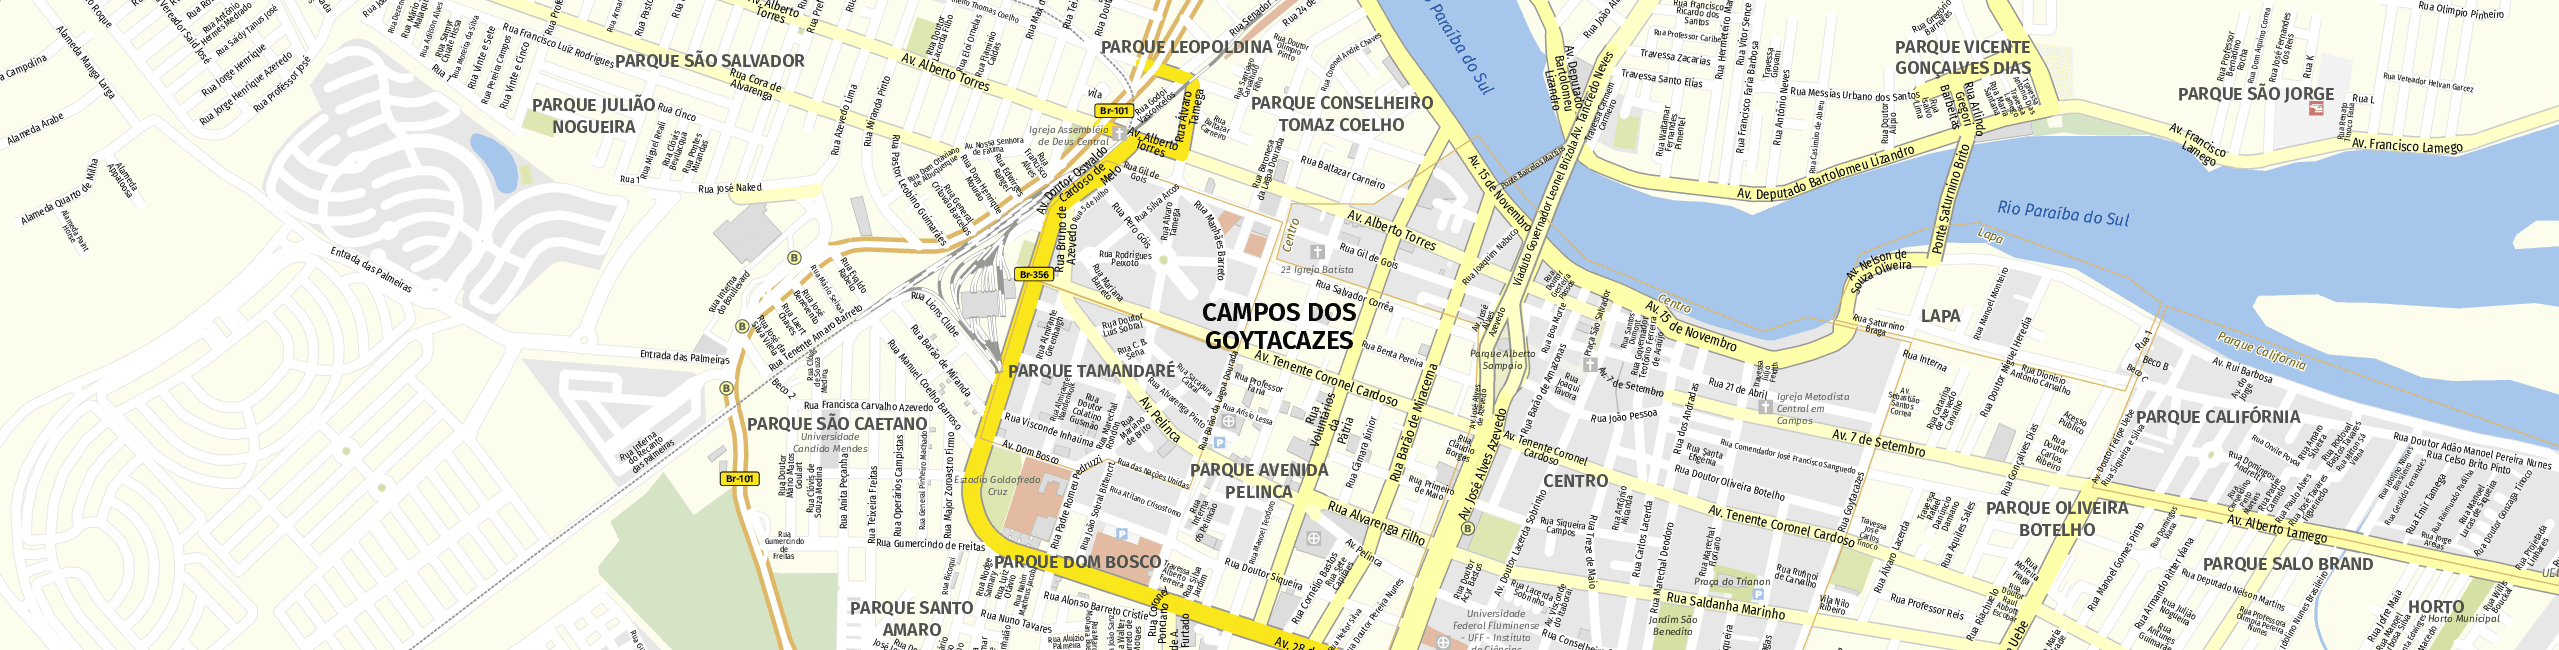 Stadtplan Campos dos Goytacazes zum Downloaden.